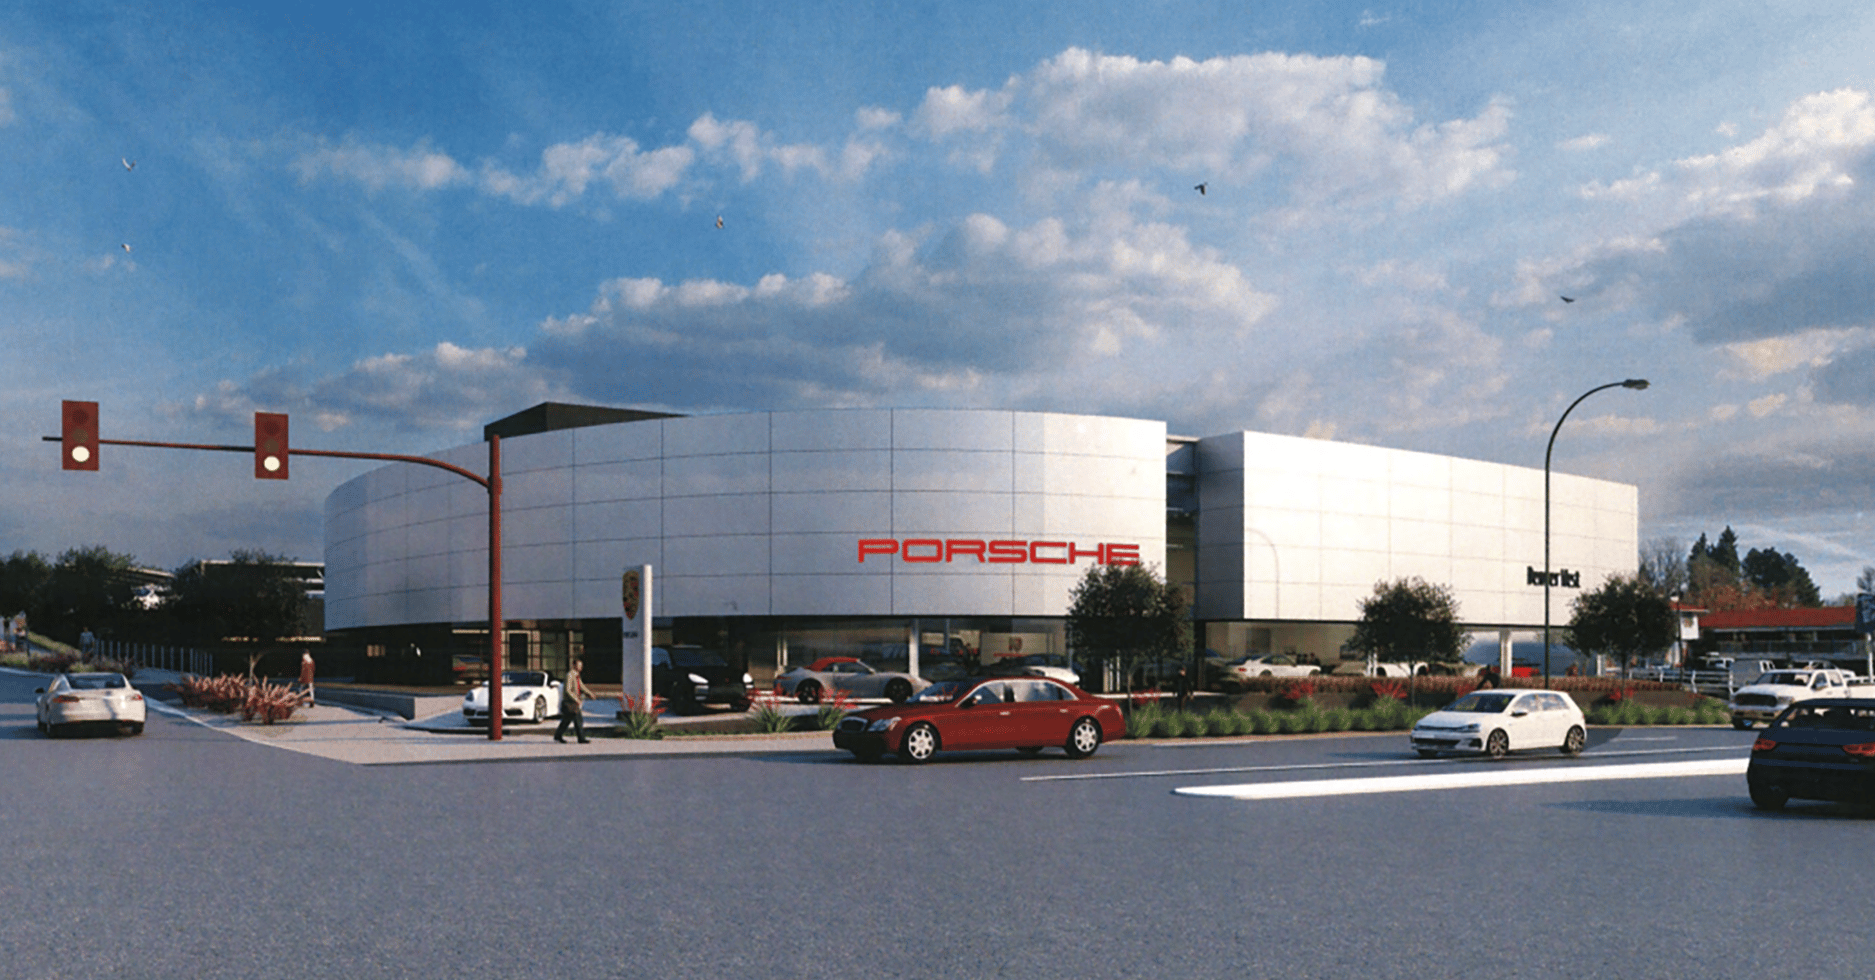 Porsche dealer building new Denver showroom